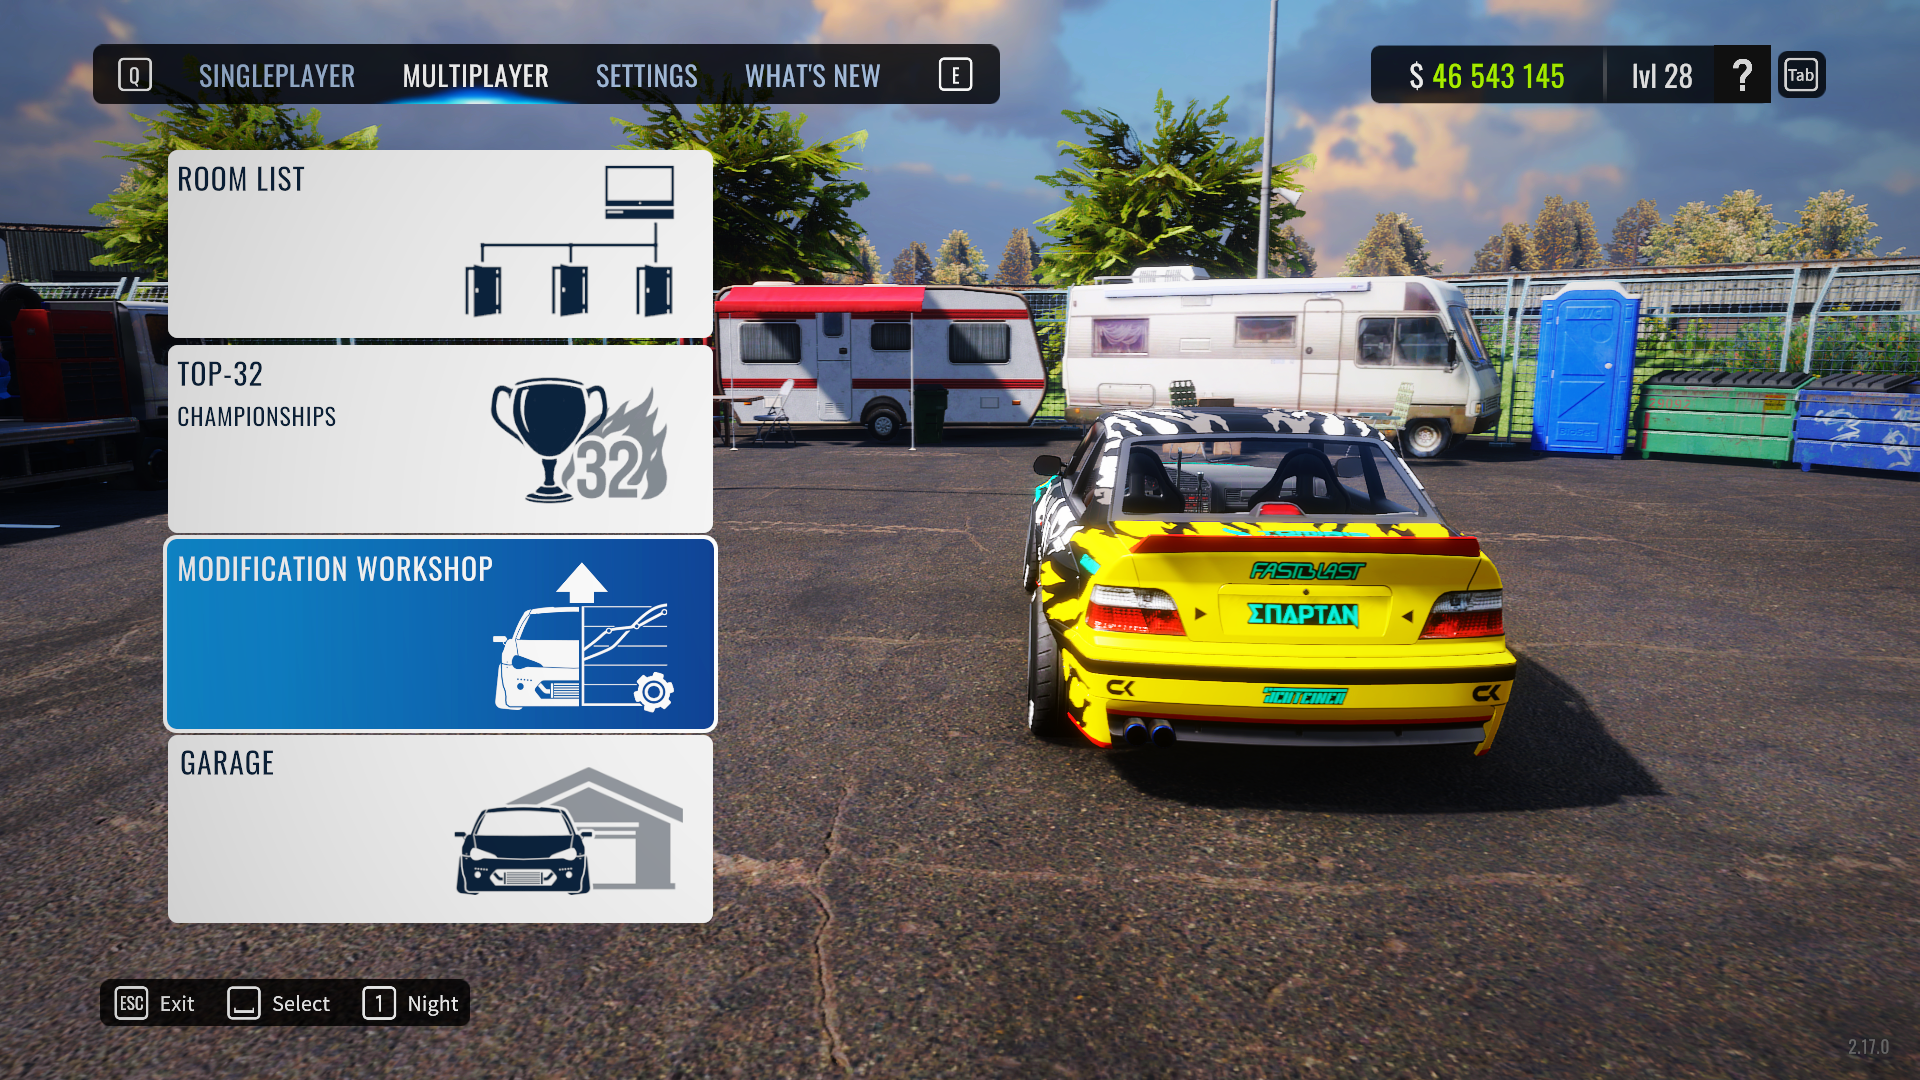 Drive Sayaka Shimoda's drift car with new CarX Drift Racing Online DLC